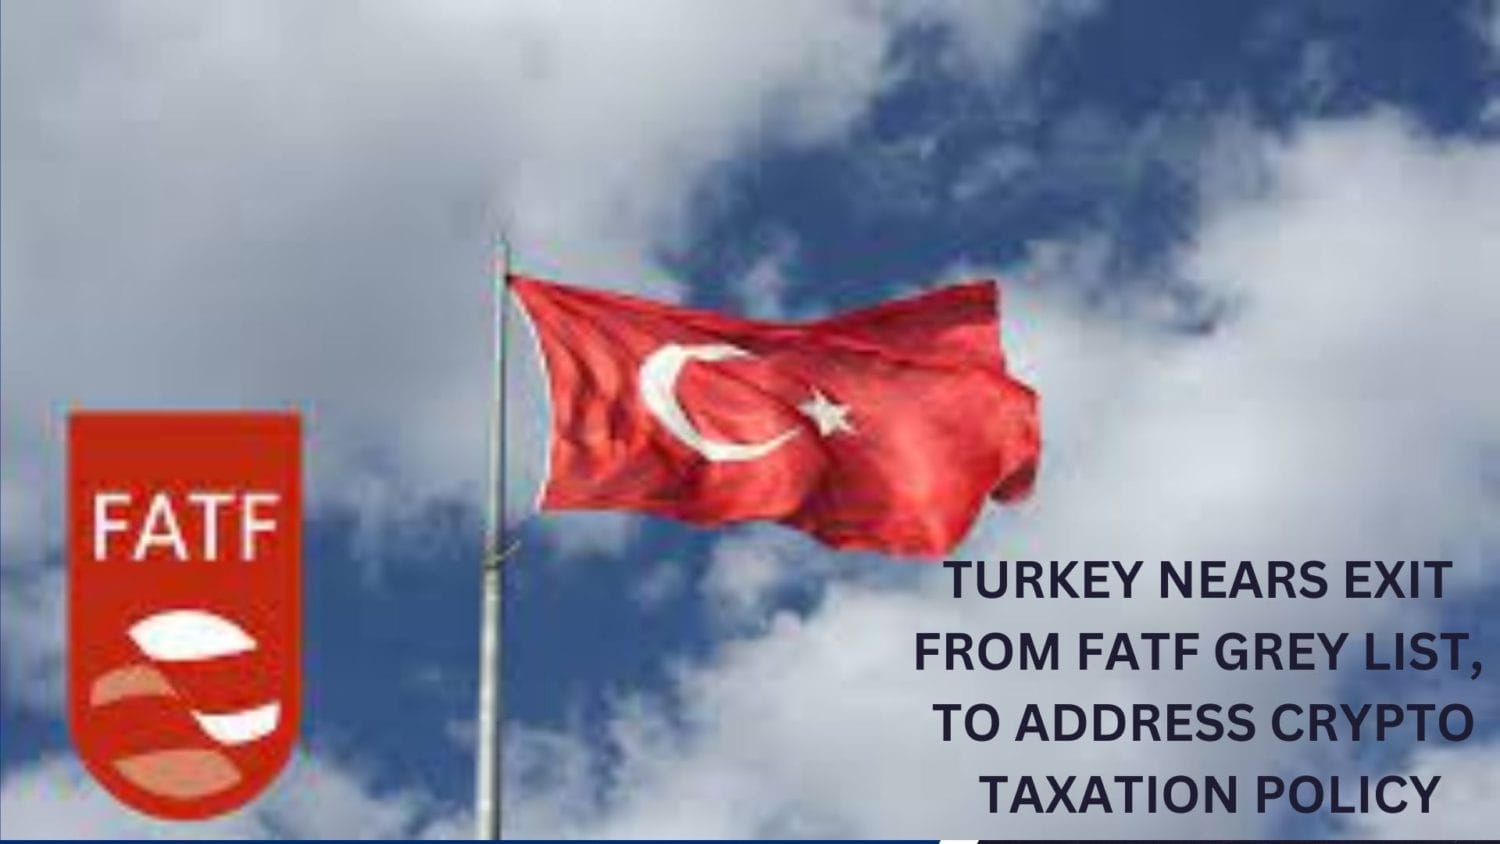 Turkey Nears Exit From Fatf Grey List; To Address Crypto Taxation Policy